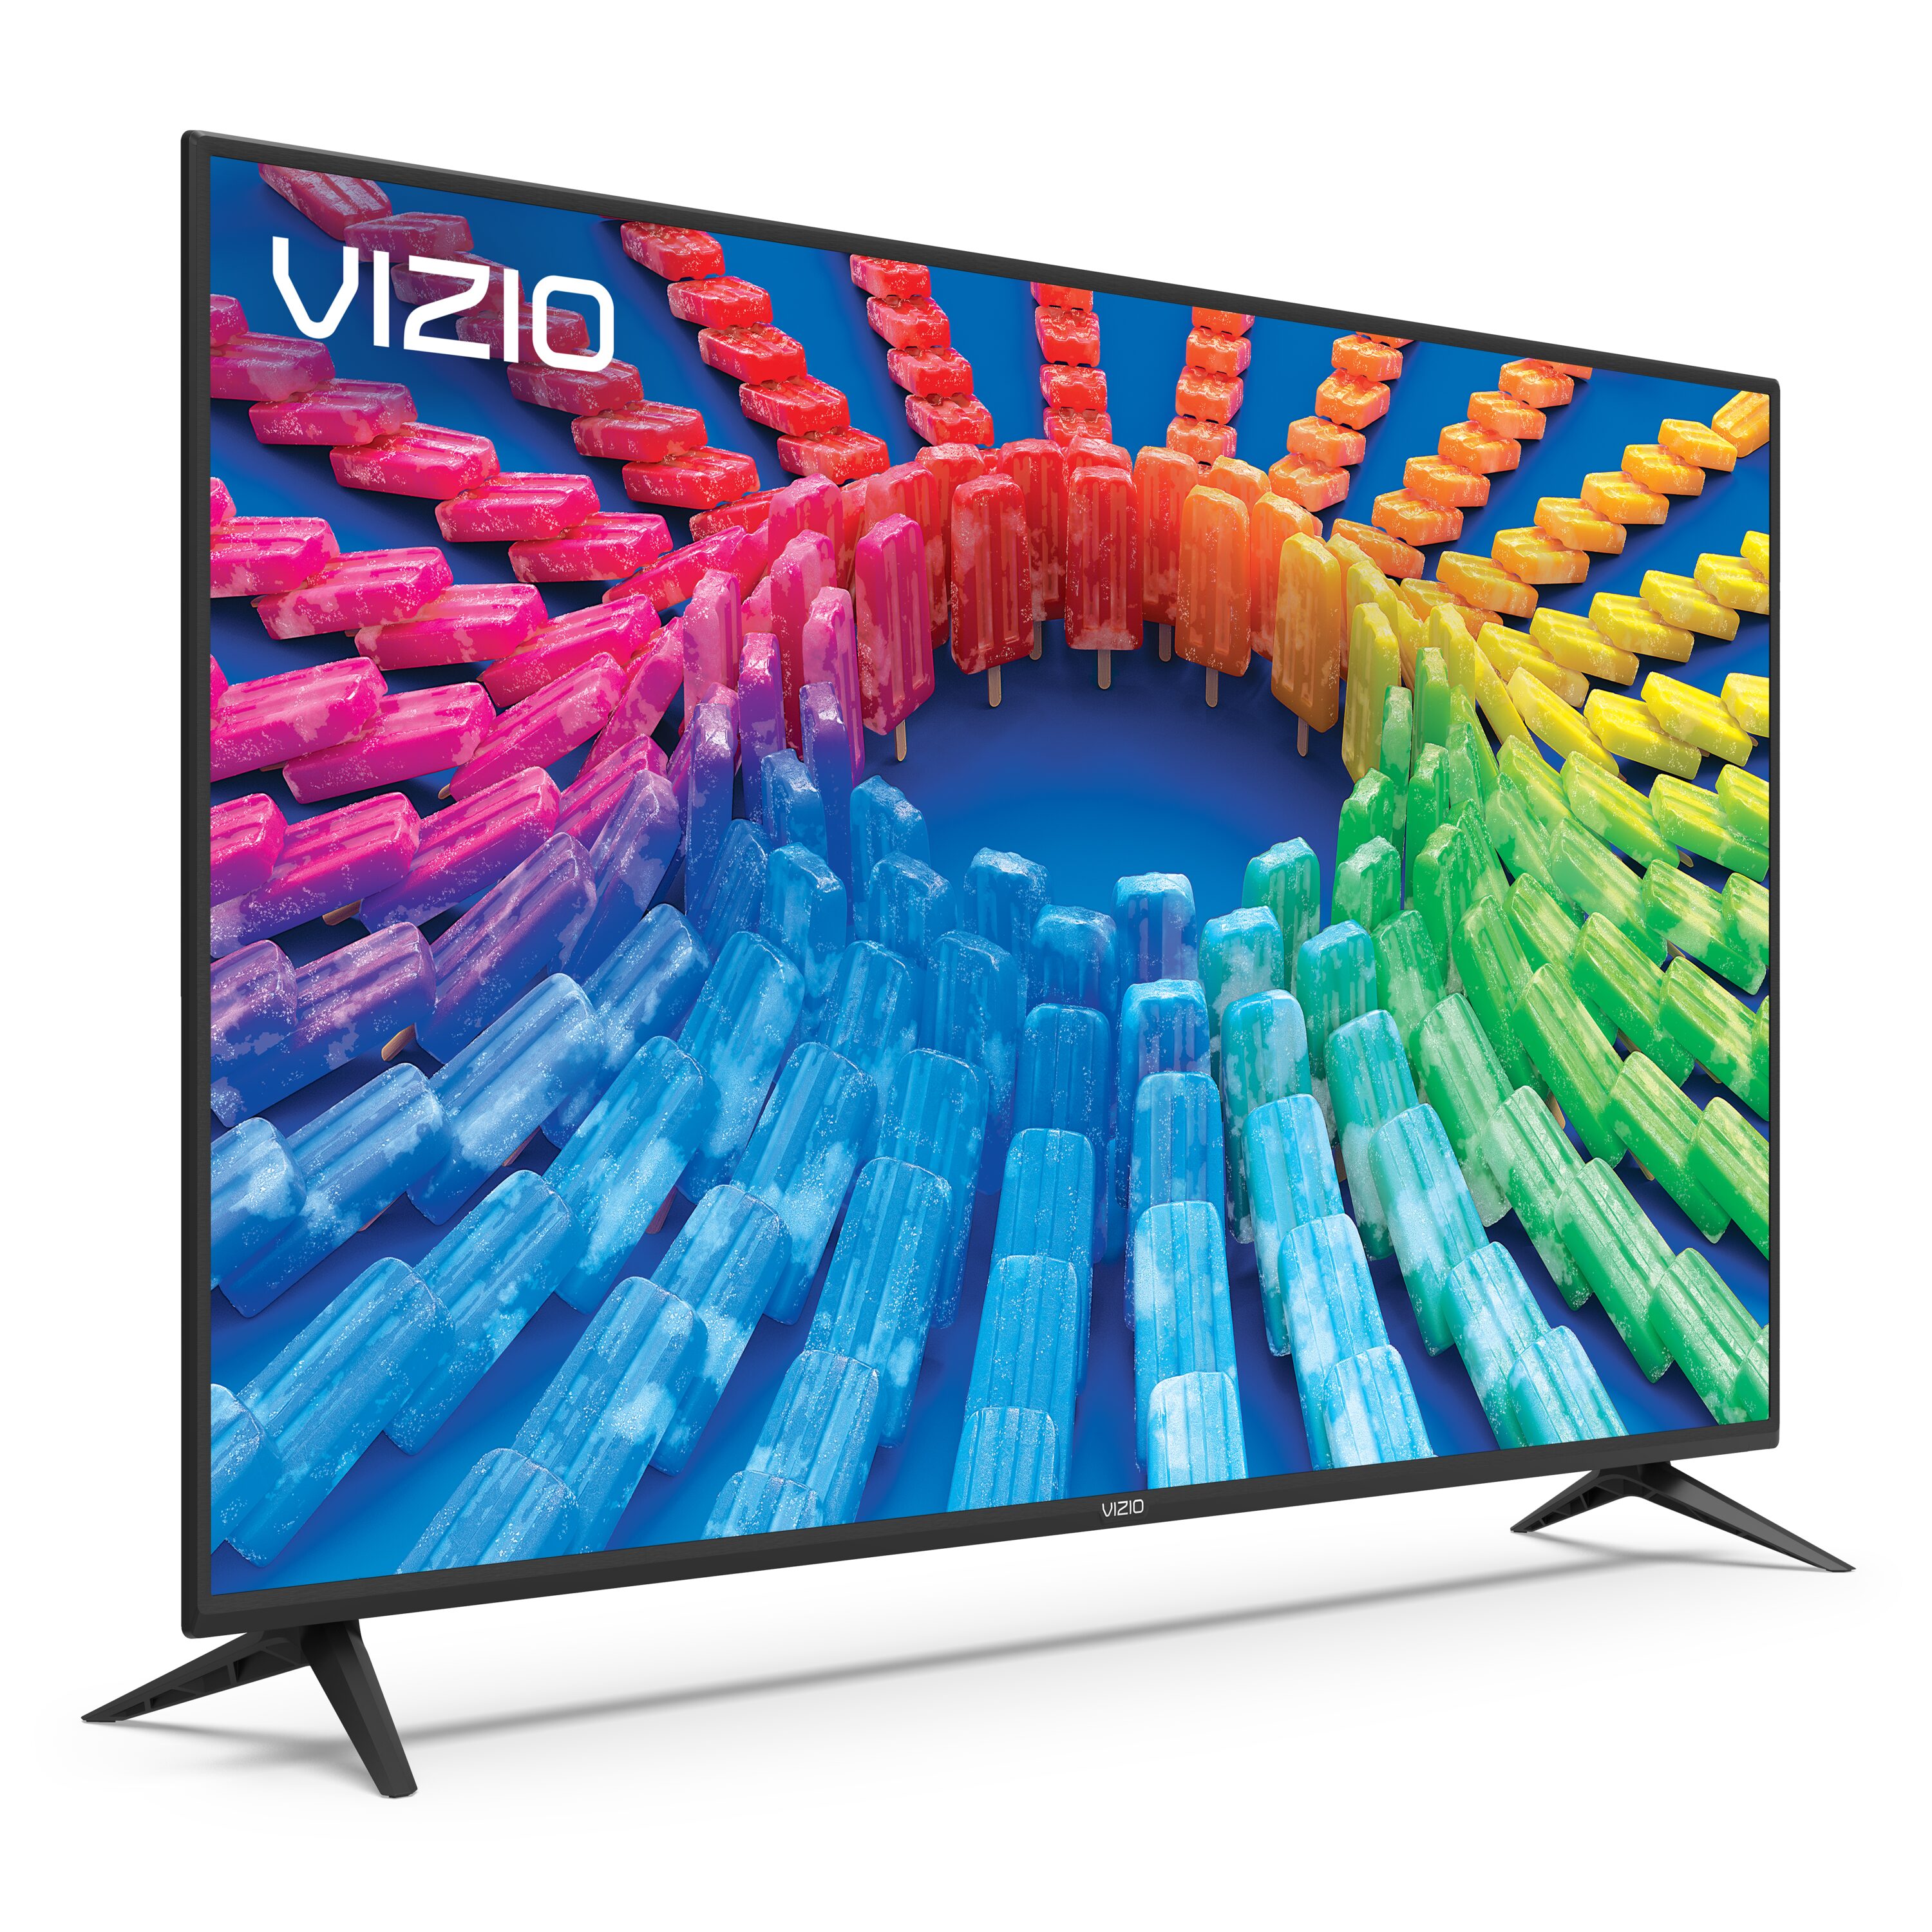 VIZIO 60" Class 4K UHD LED SmartCast Smart TV HDR V-Series V605-H - image 13 of 30